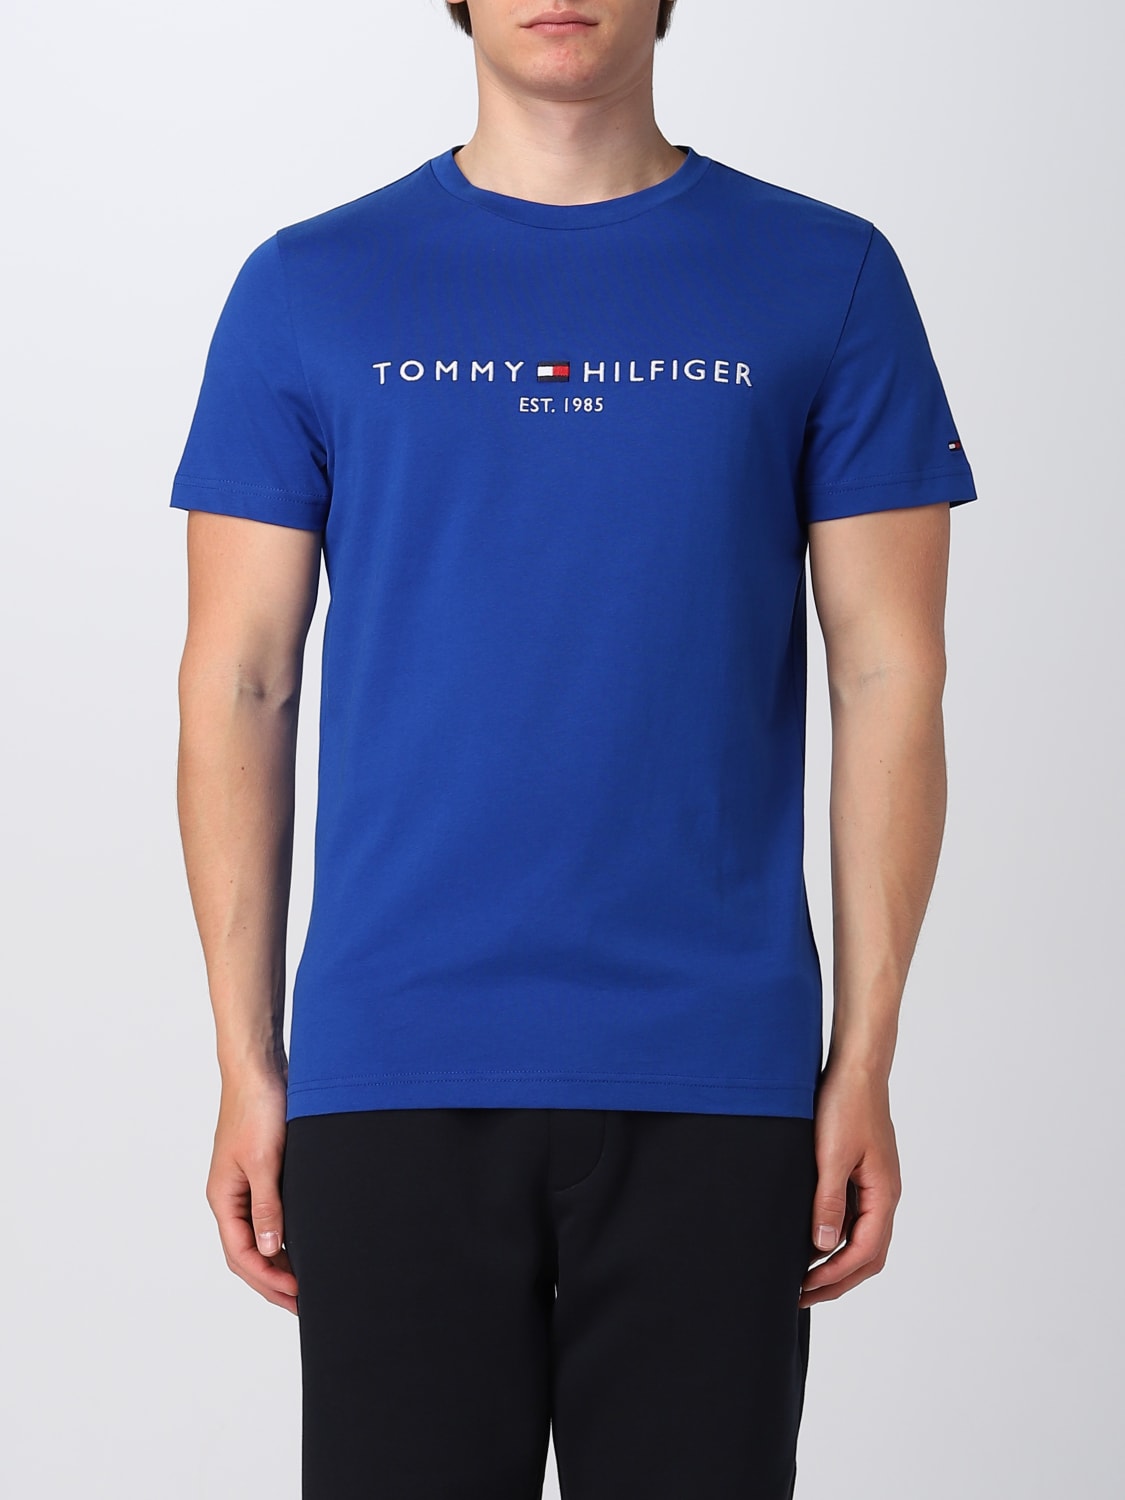 TOMMY HILFIGER: t-shirt for man - Royal Blue | Tommy Hilfiger t-shirt ...